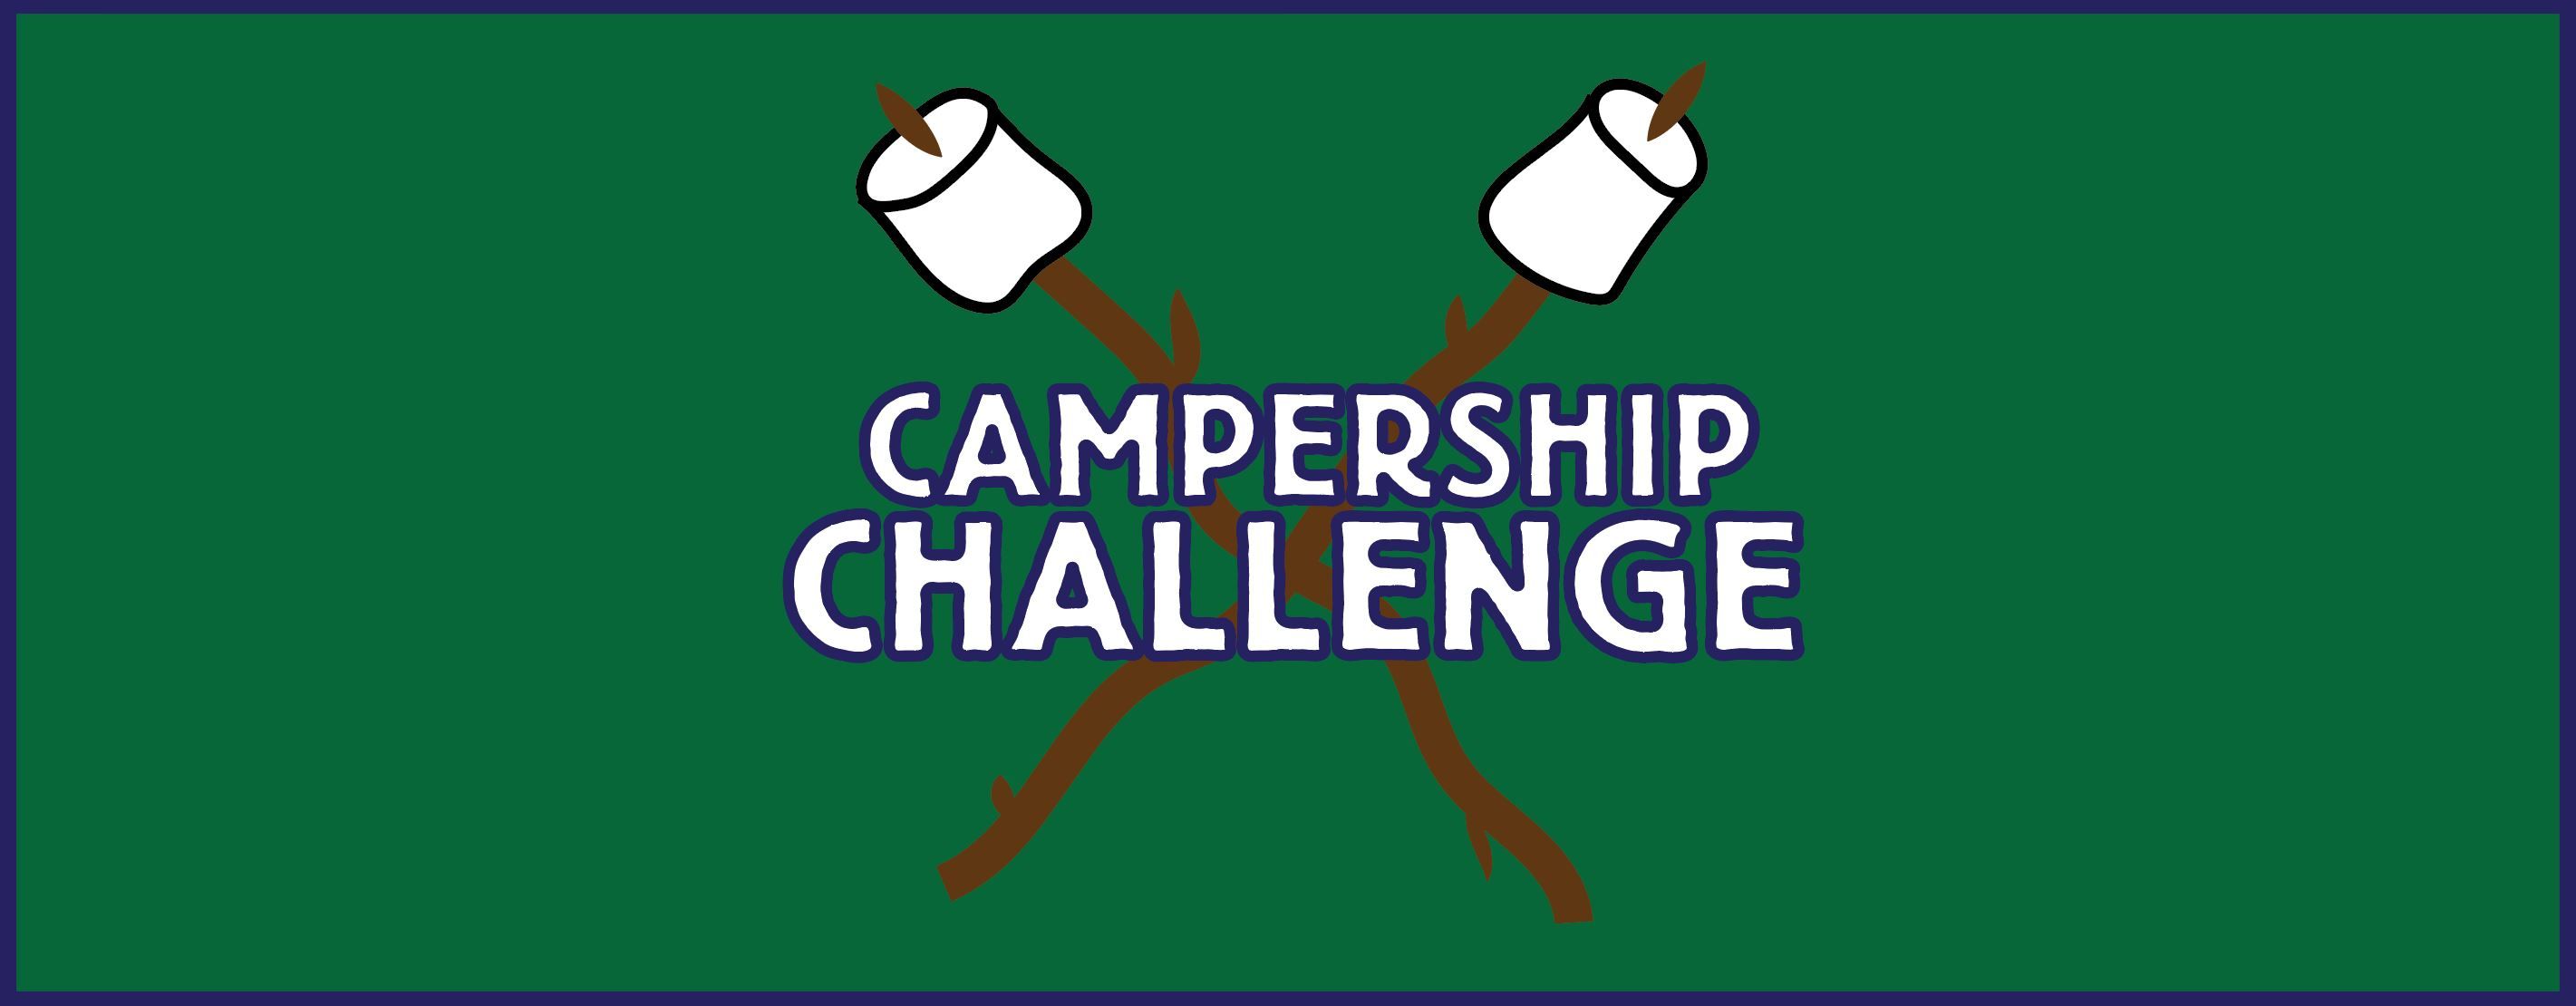 Campership Challenge